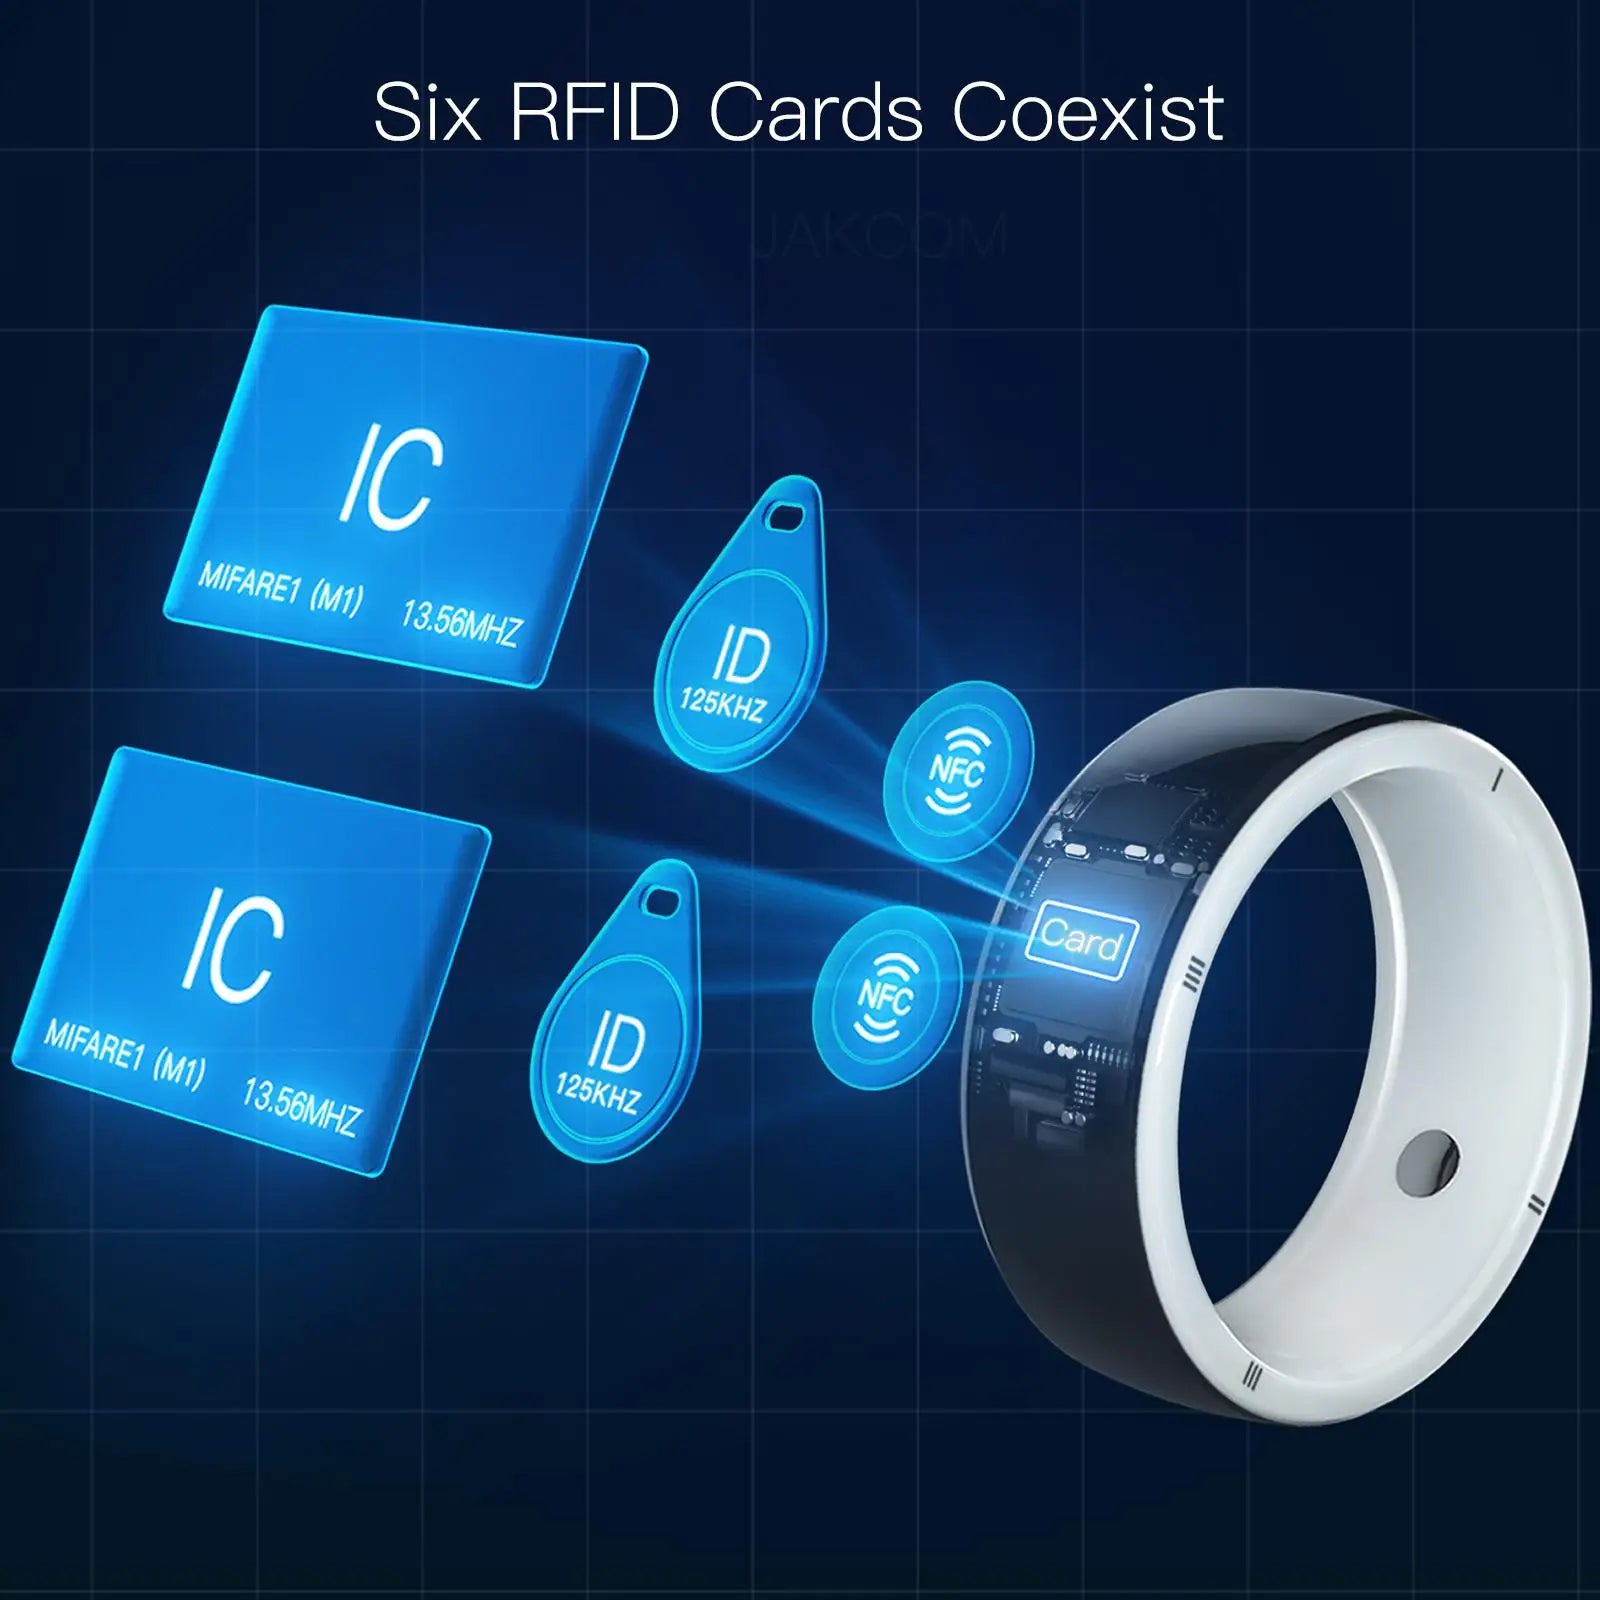 JAKCOM R5 Smart Ring Super value as nfc luggage tag card cloner kit debt card a1 rfid human eas smart 4 retro uhf